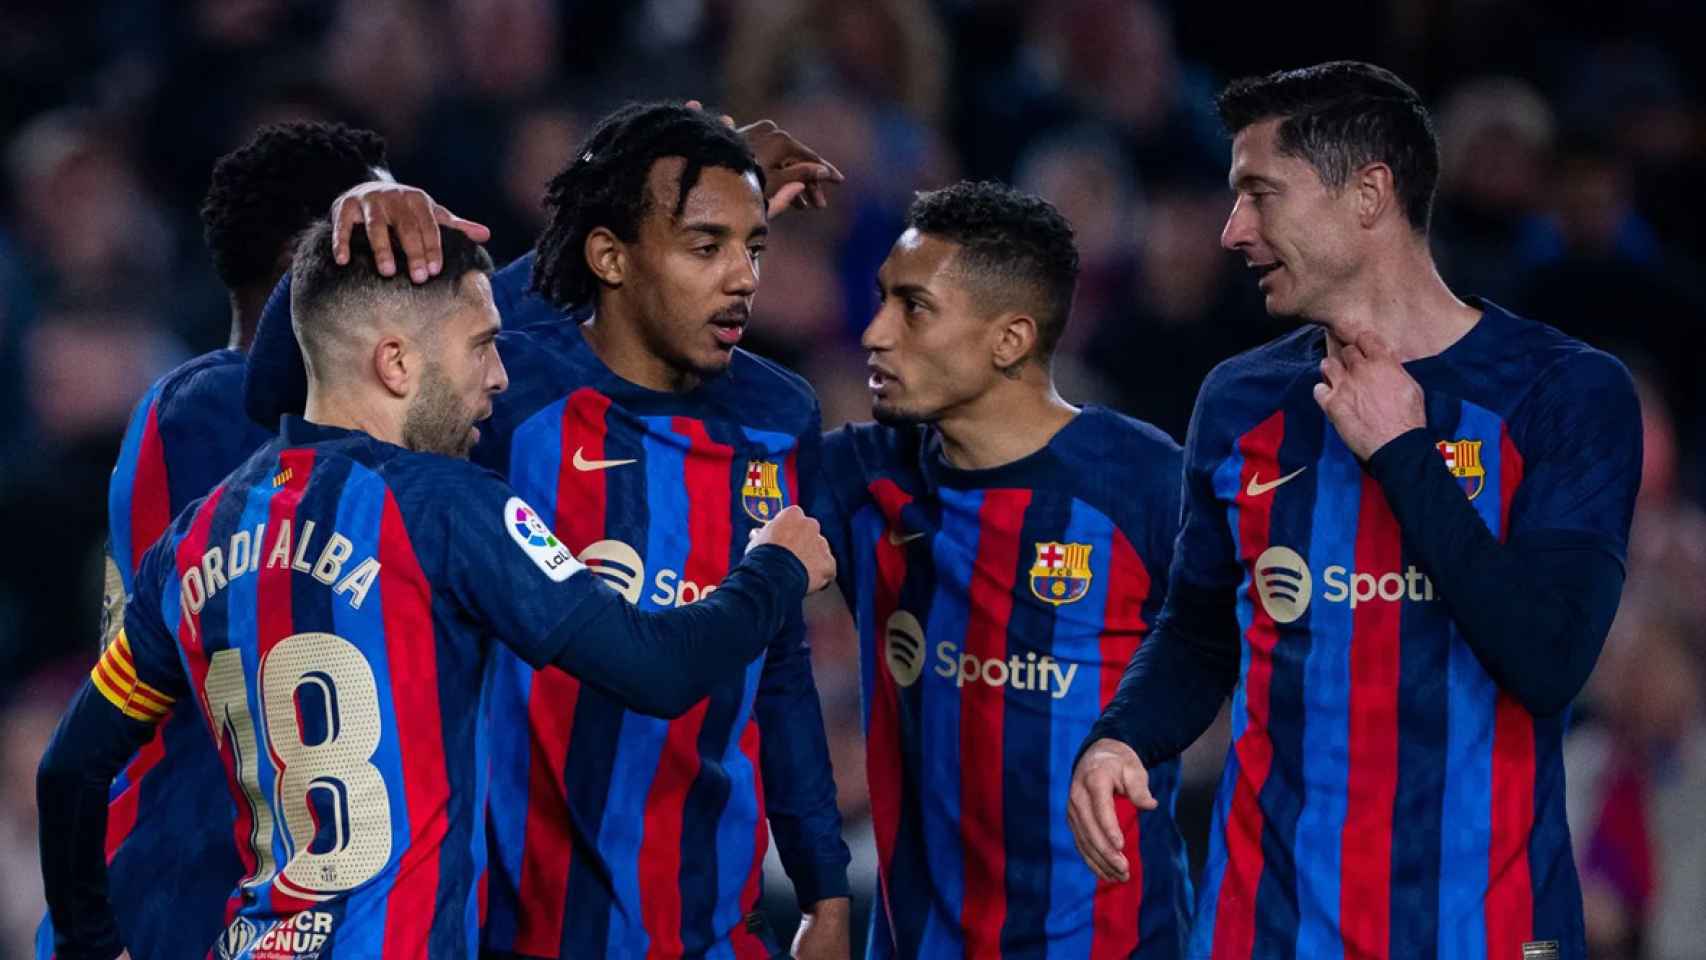 Los jugadores del Barça de Xavi festejan un gol anotado en la Liga / FCB